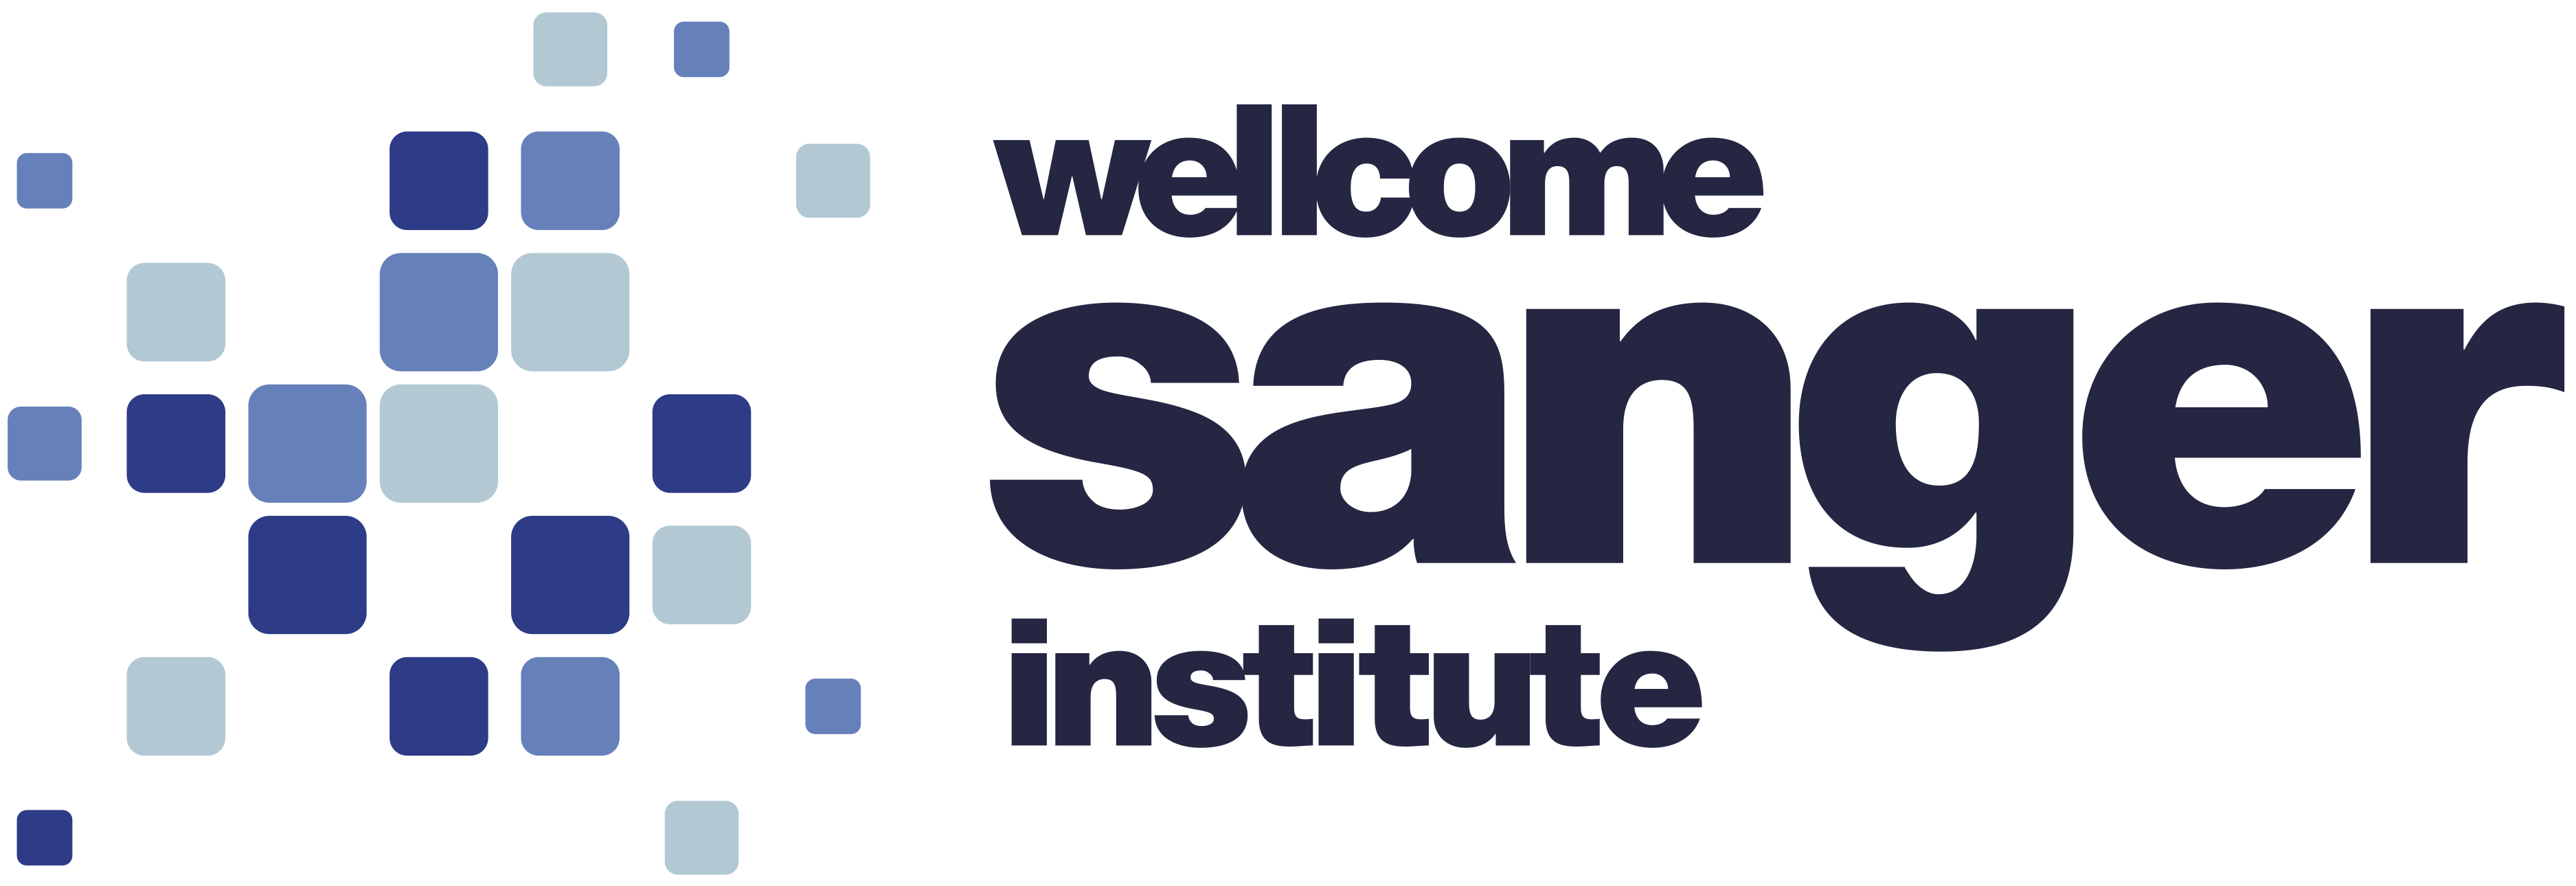 Google Main Logo - Wellcome Sanger Institute Branding Guidelines and Logos. Wellcome